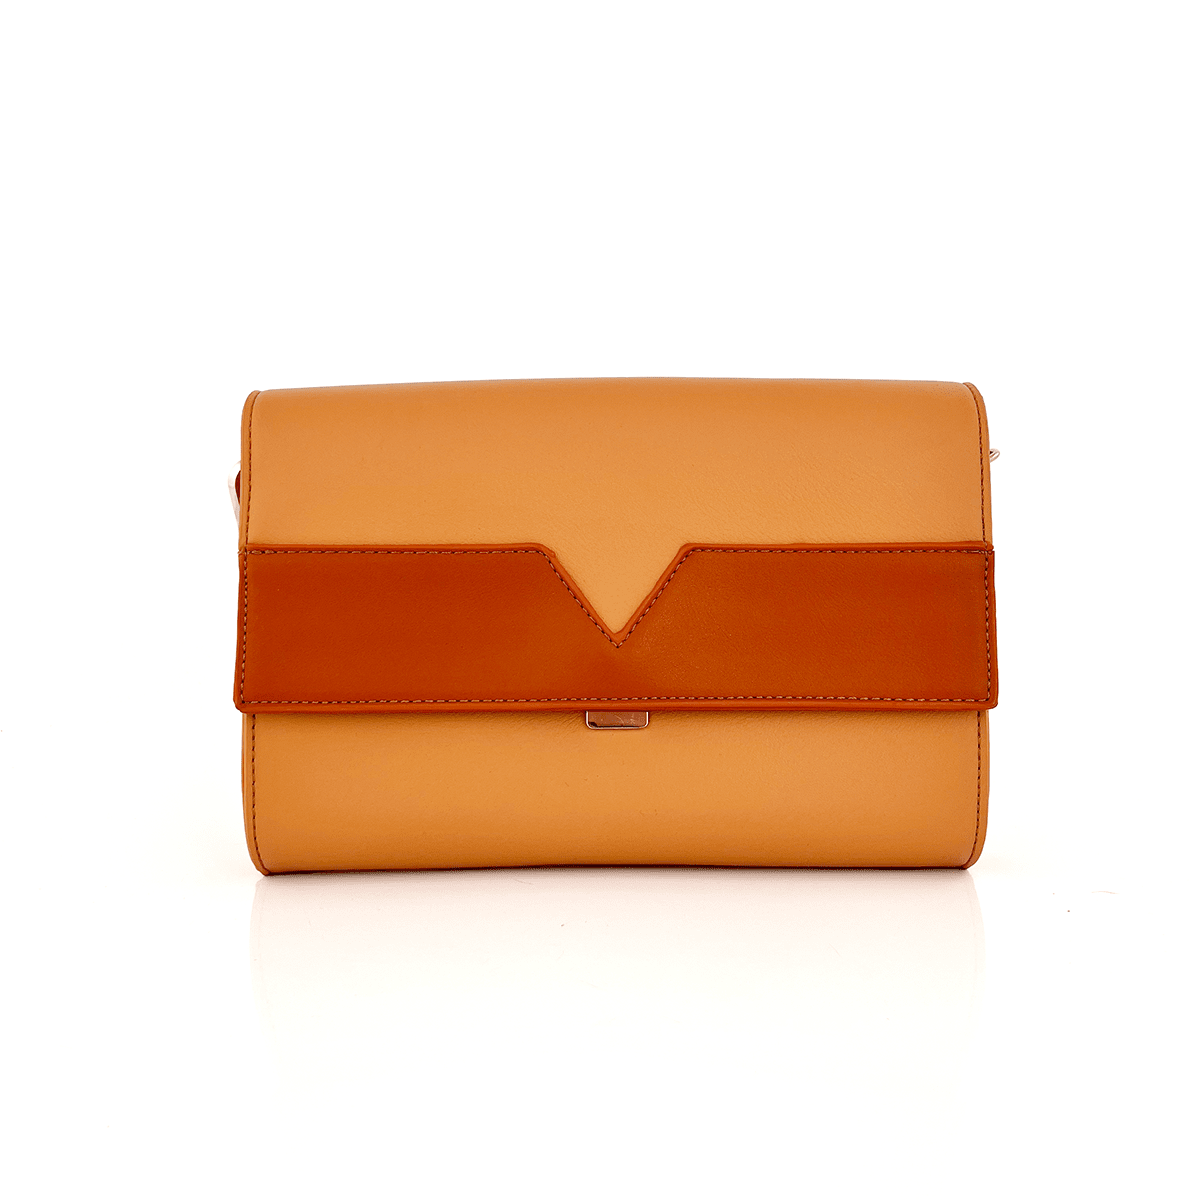 Diana & Co - Луксозна дамска чанта - оранжева